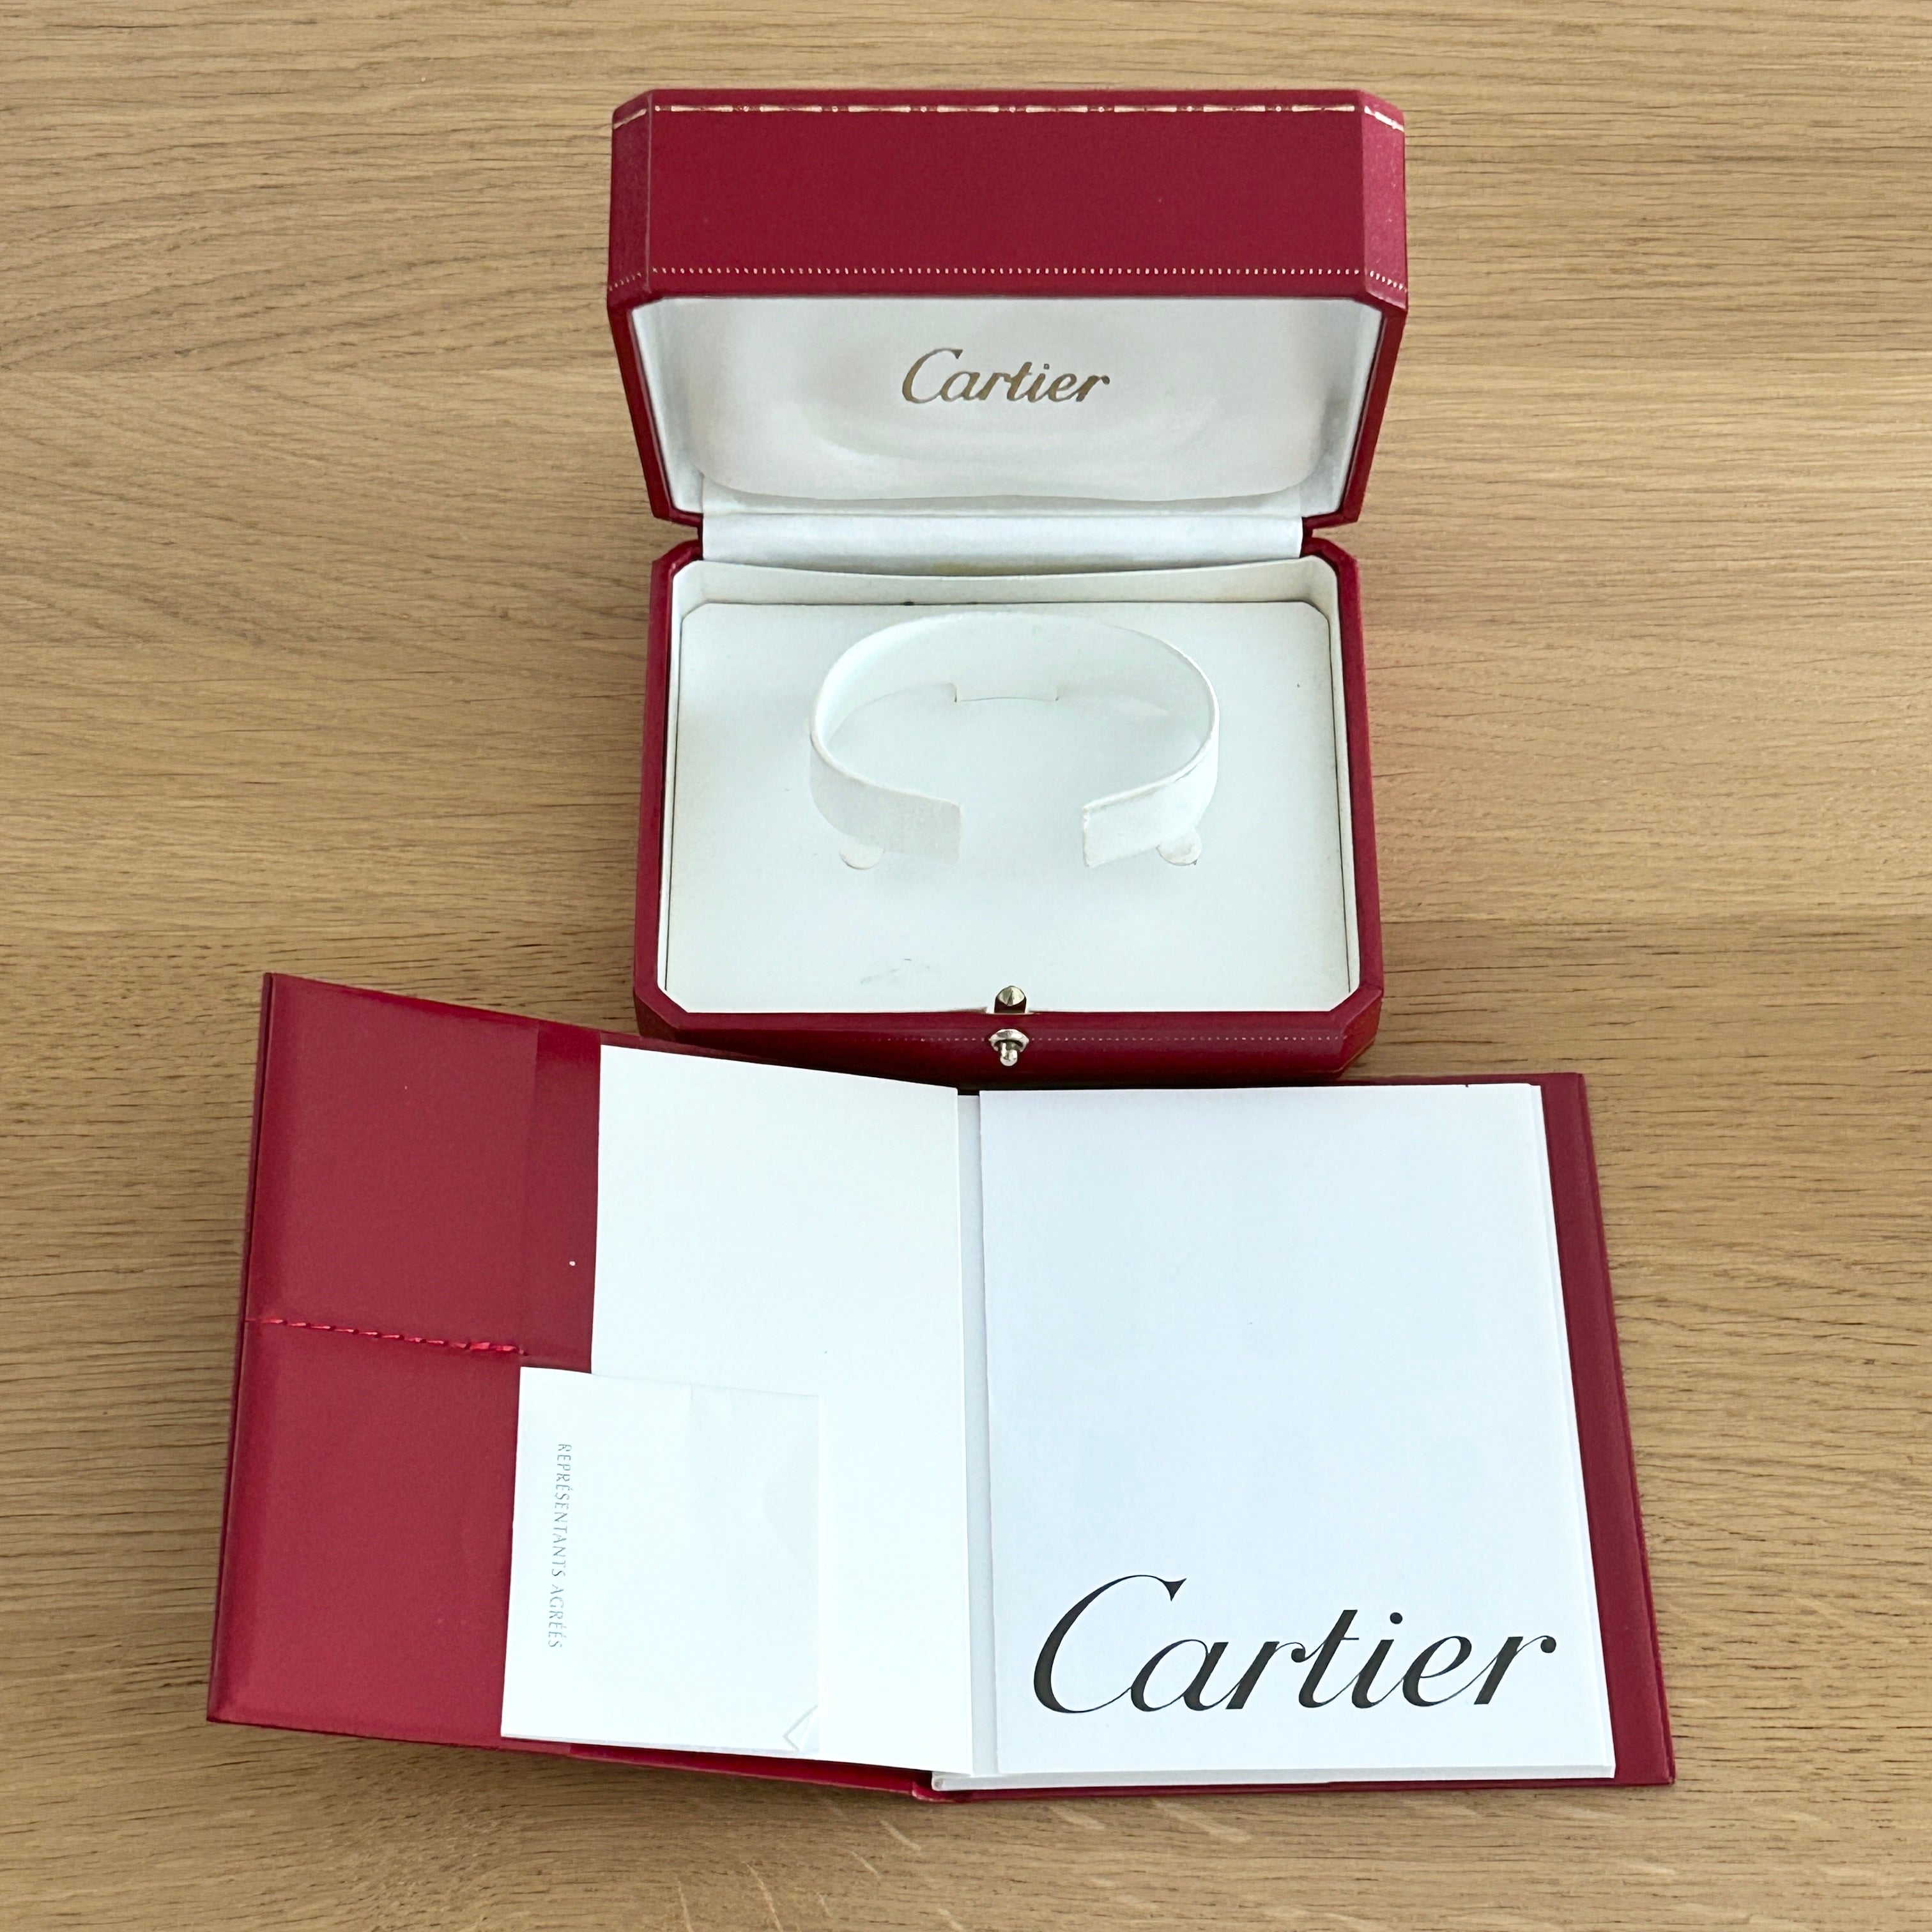 【Cartier】タンクフランセーズSM 18KYG 付属品付き